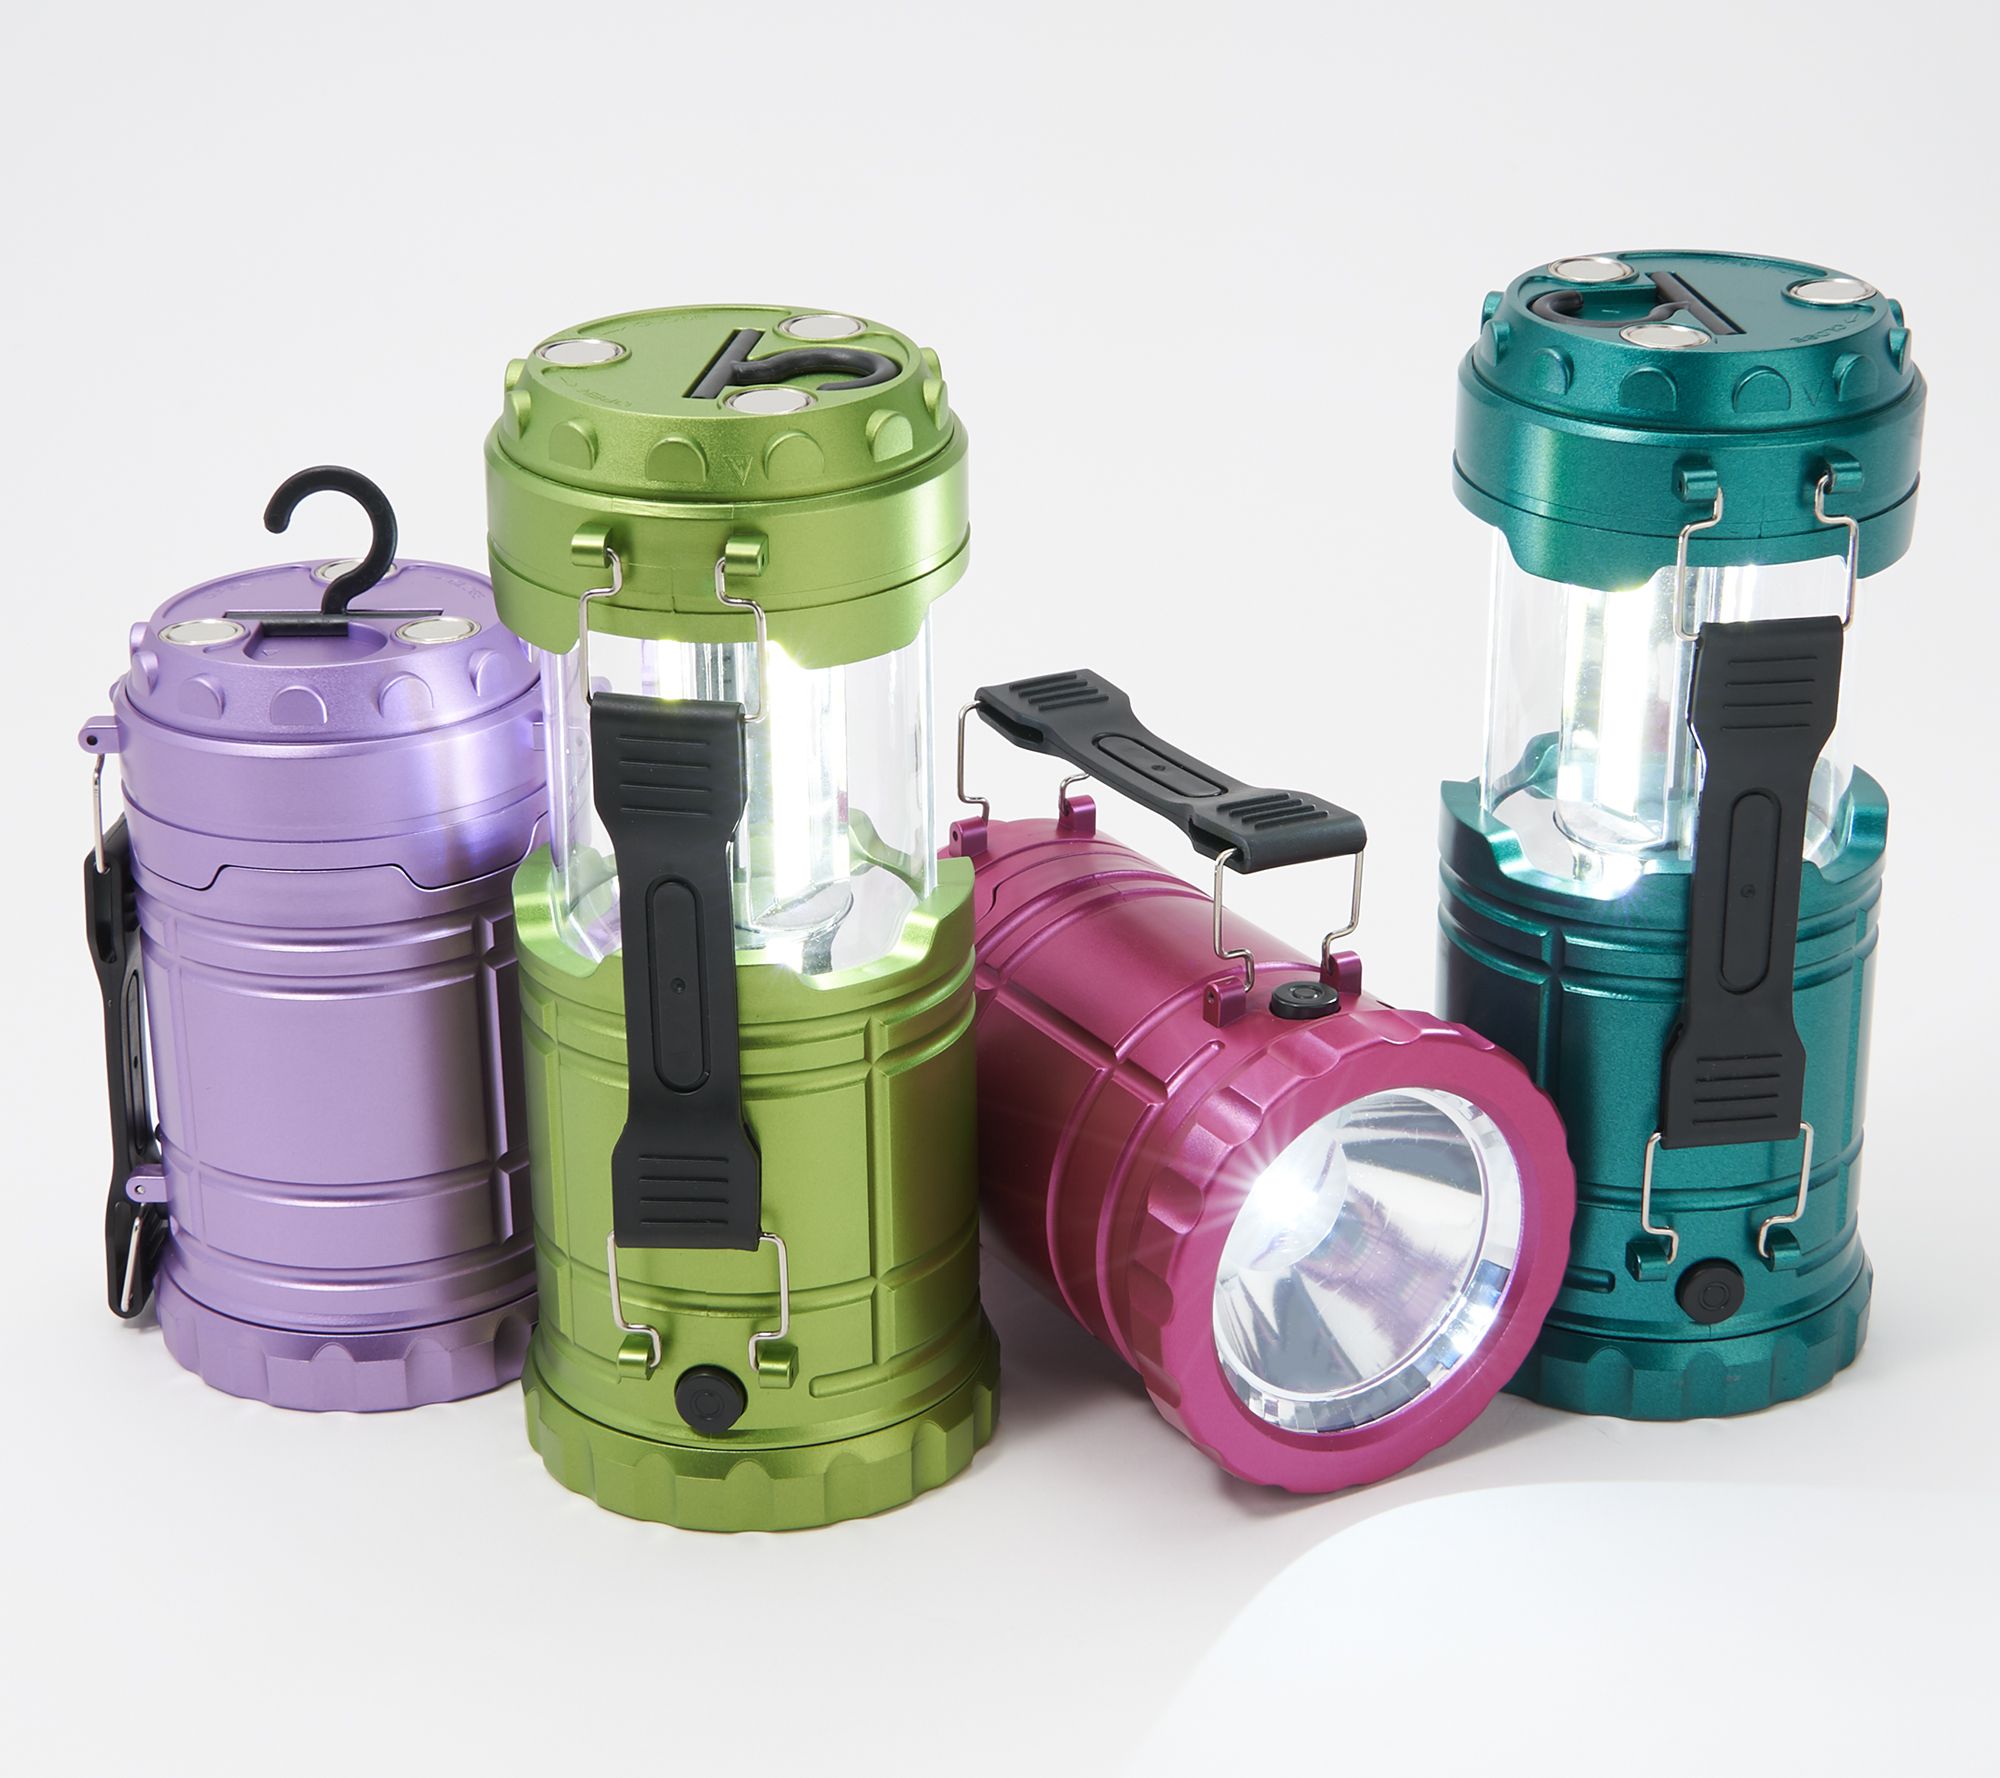 Adventuridge Pop-Up LED Lantern Set